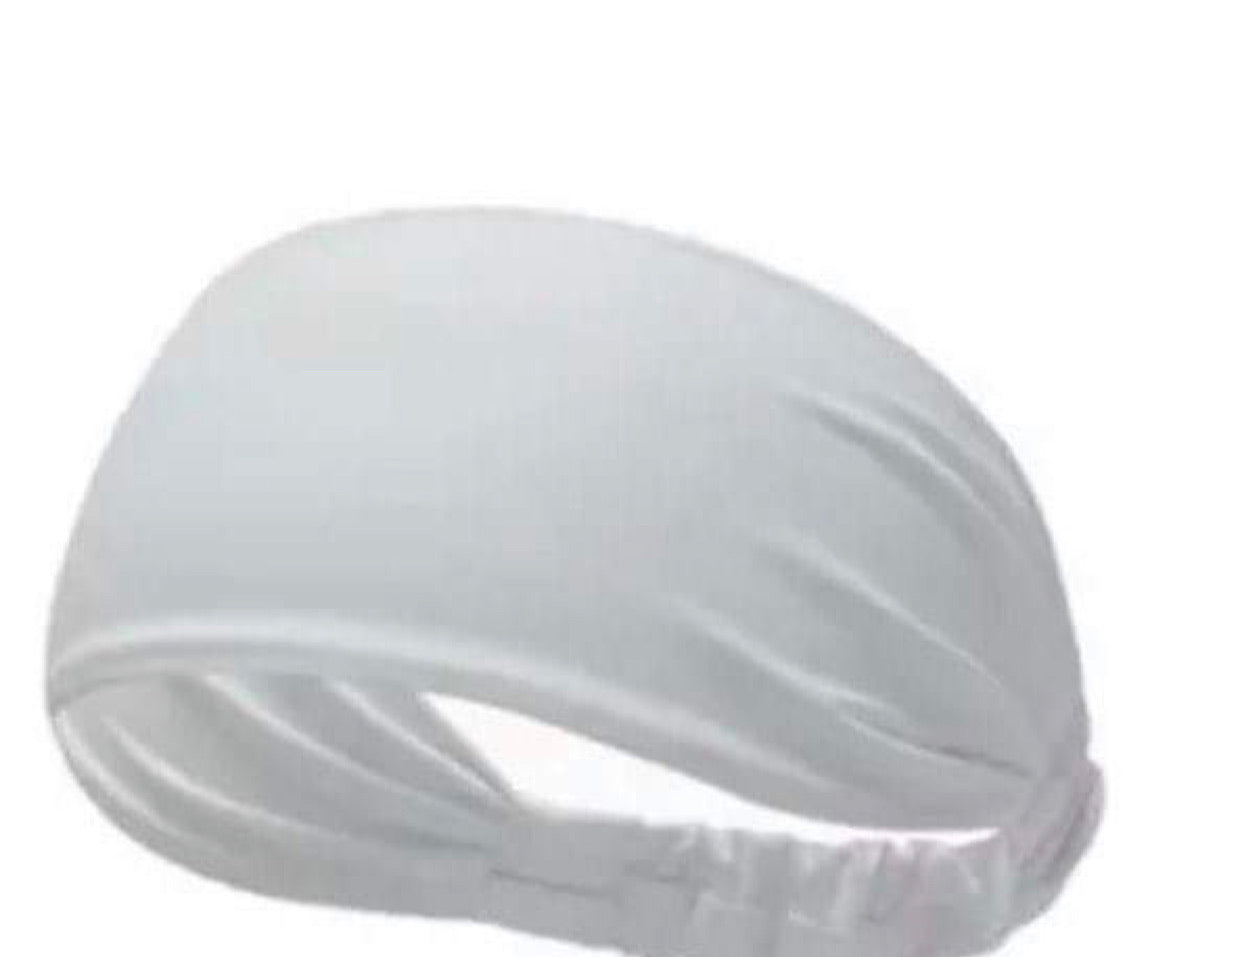 White Polyester Headband